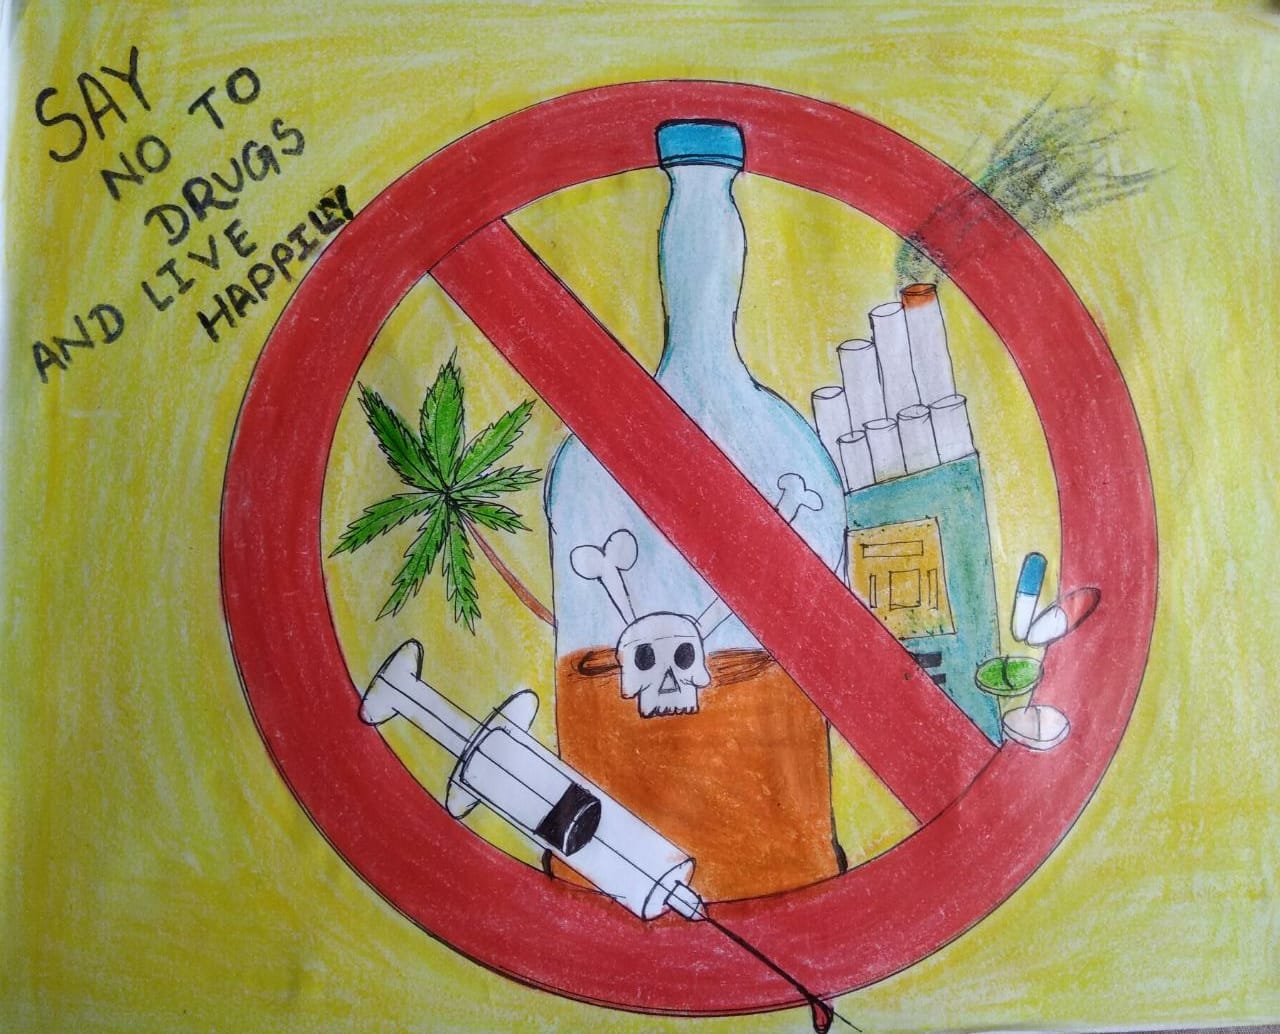 Share 131+ drug abuse drawing competition super hot - vietkidsiq.edu.vn